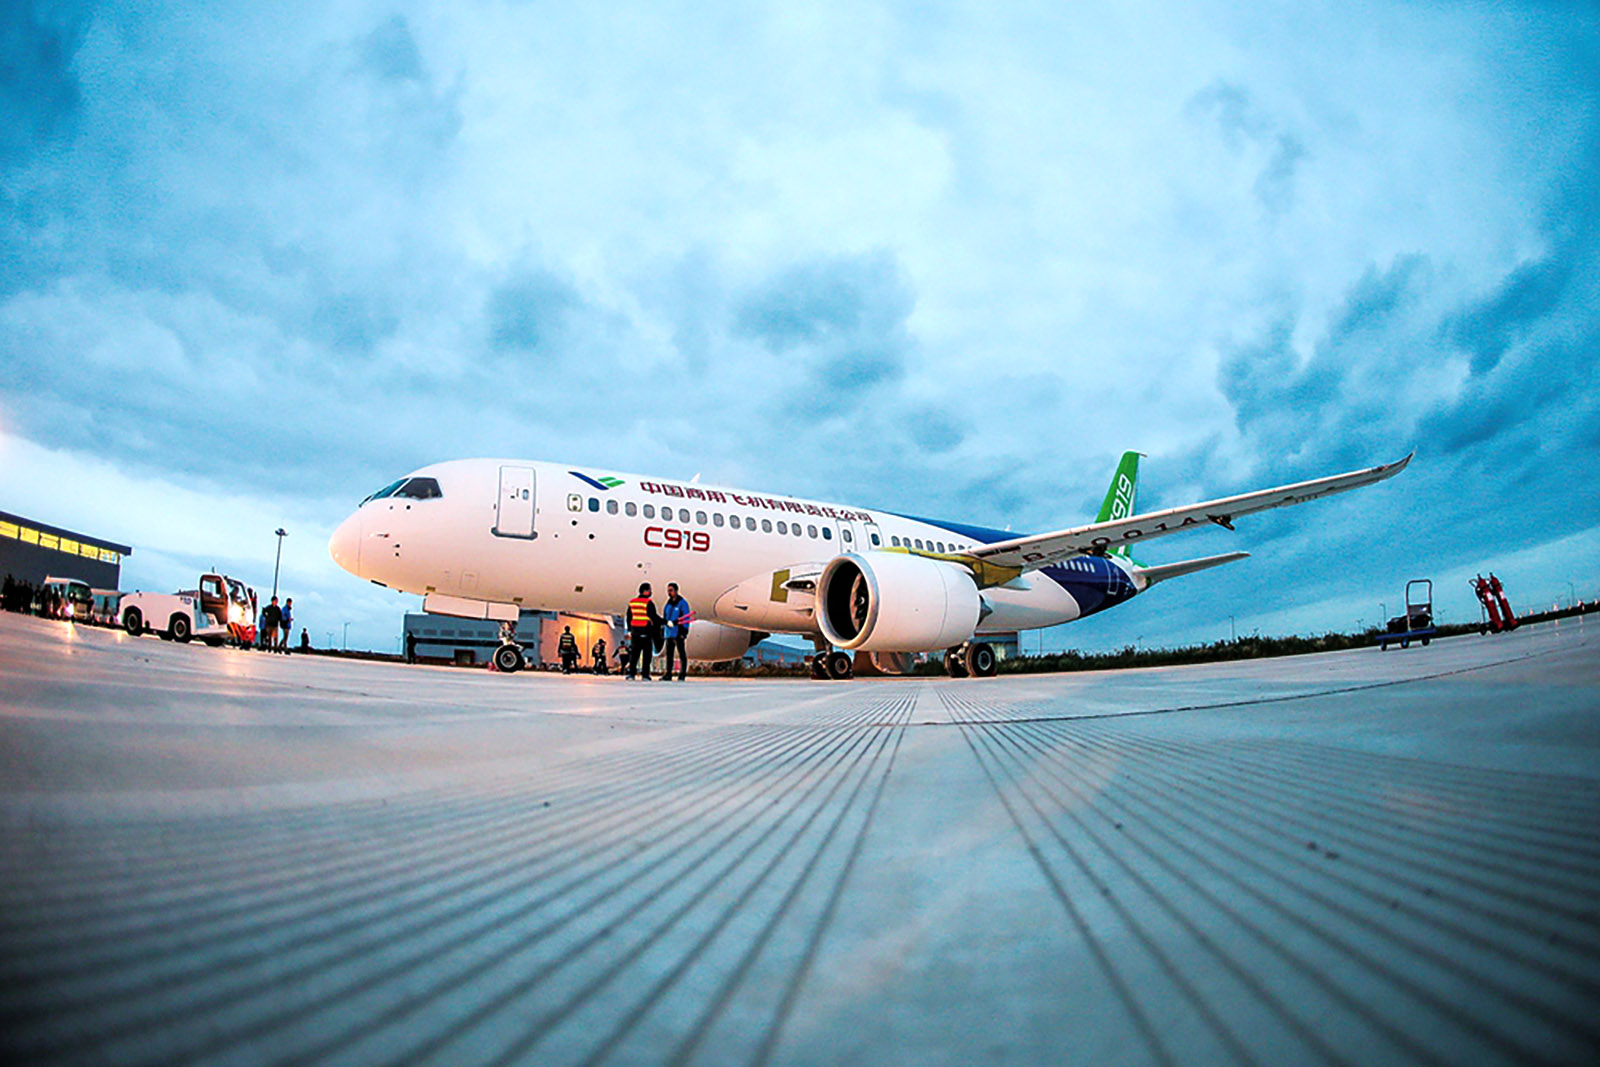 TIMELINE: Development of C919, China’s first commercial jetliner